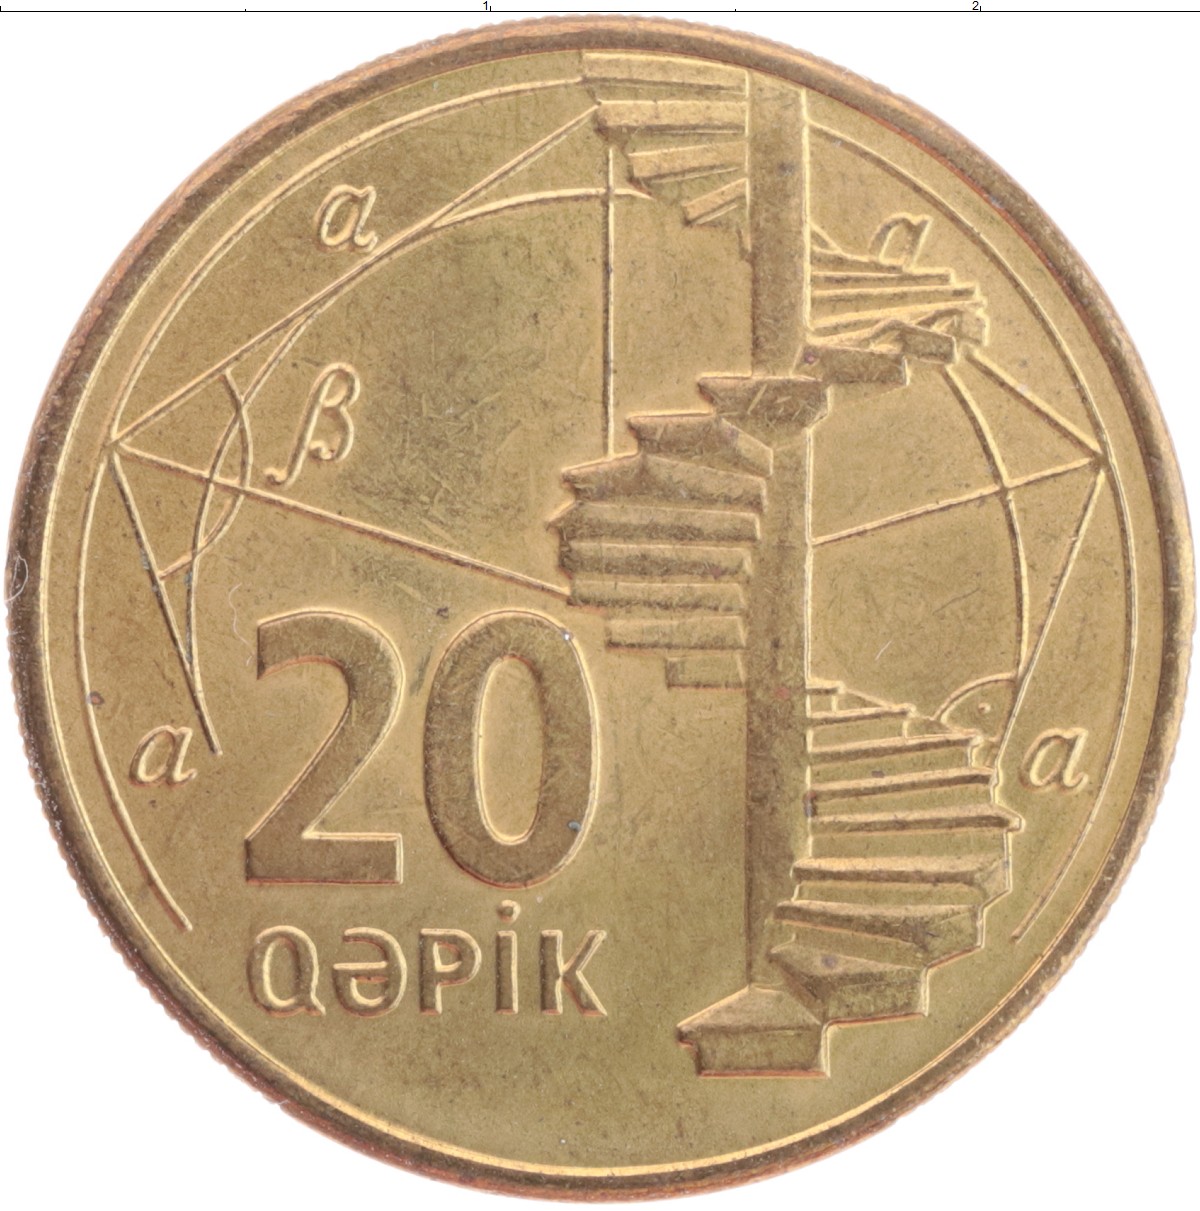 Азербайджанские монеты. Азербайджанские монеты 10 Qepik. Азербайджанские монеты 20 Qepik в рублях. Азербайджанская монета 20. Монета Азербайджана 1.